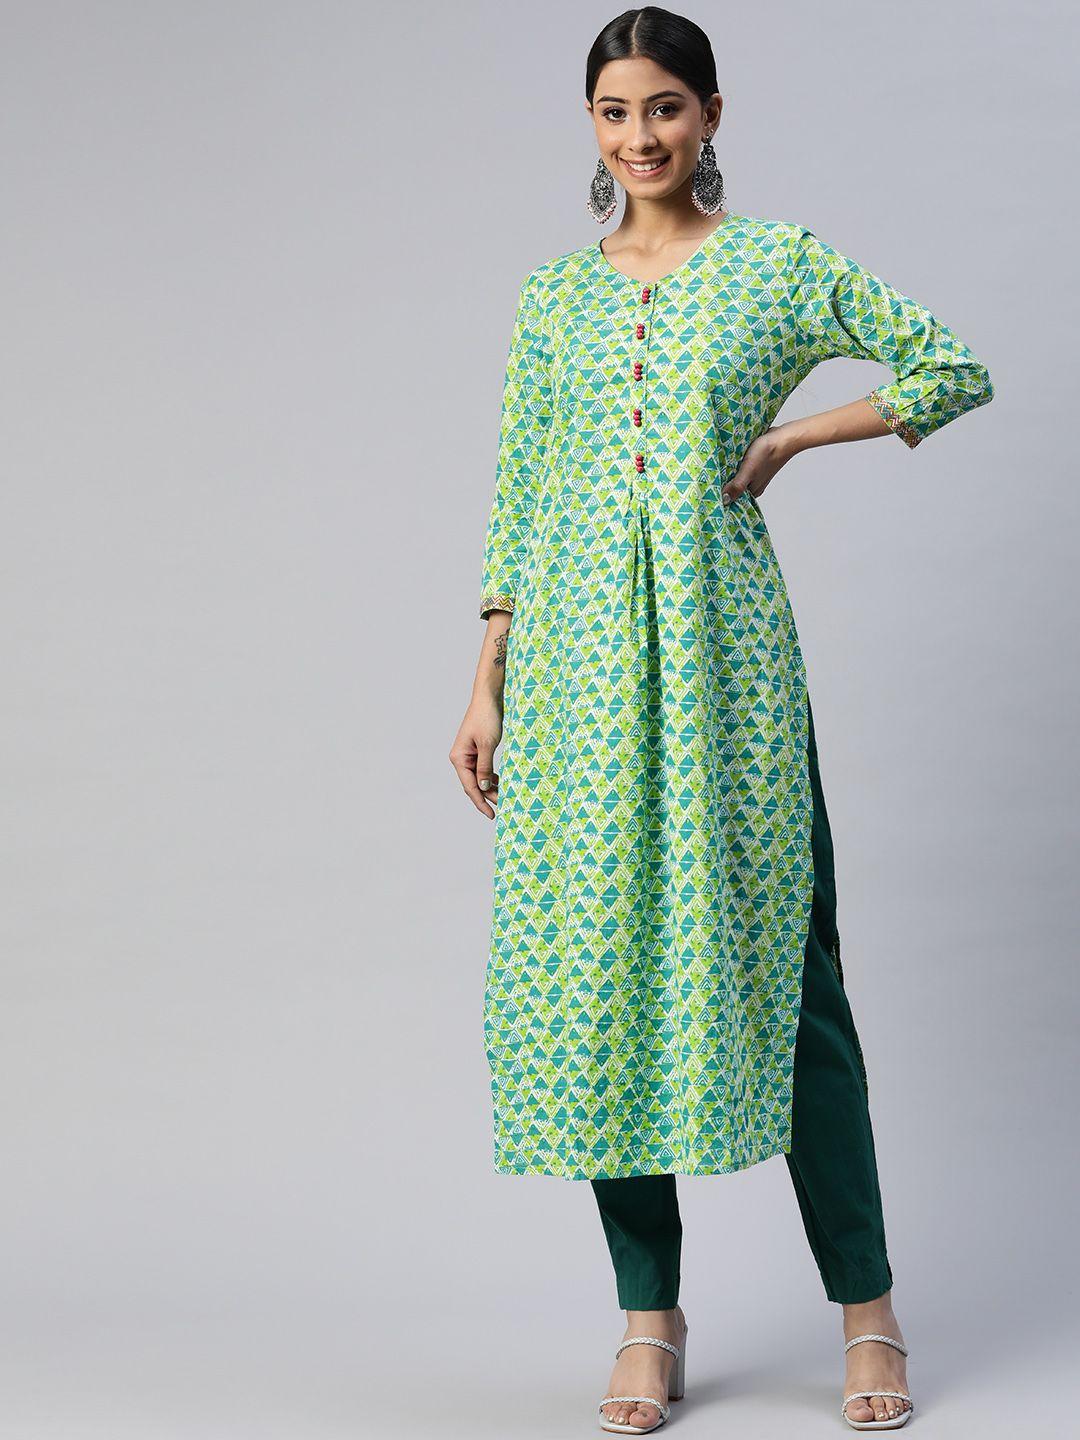 svarchi-women-teal-green-&-yellow-geometric-printed-cotton-kurta